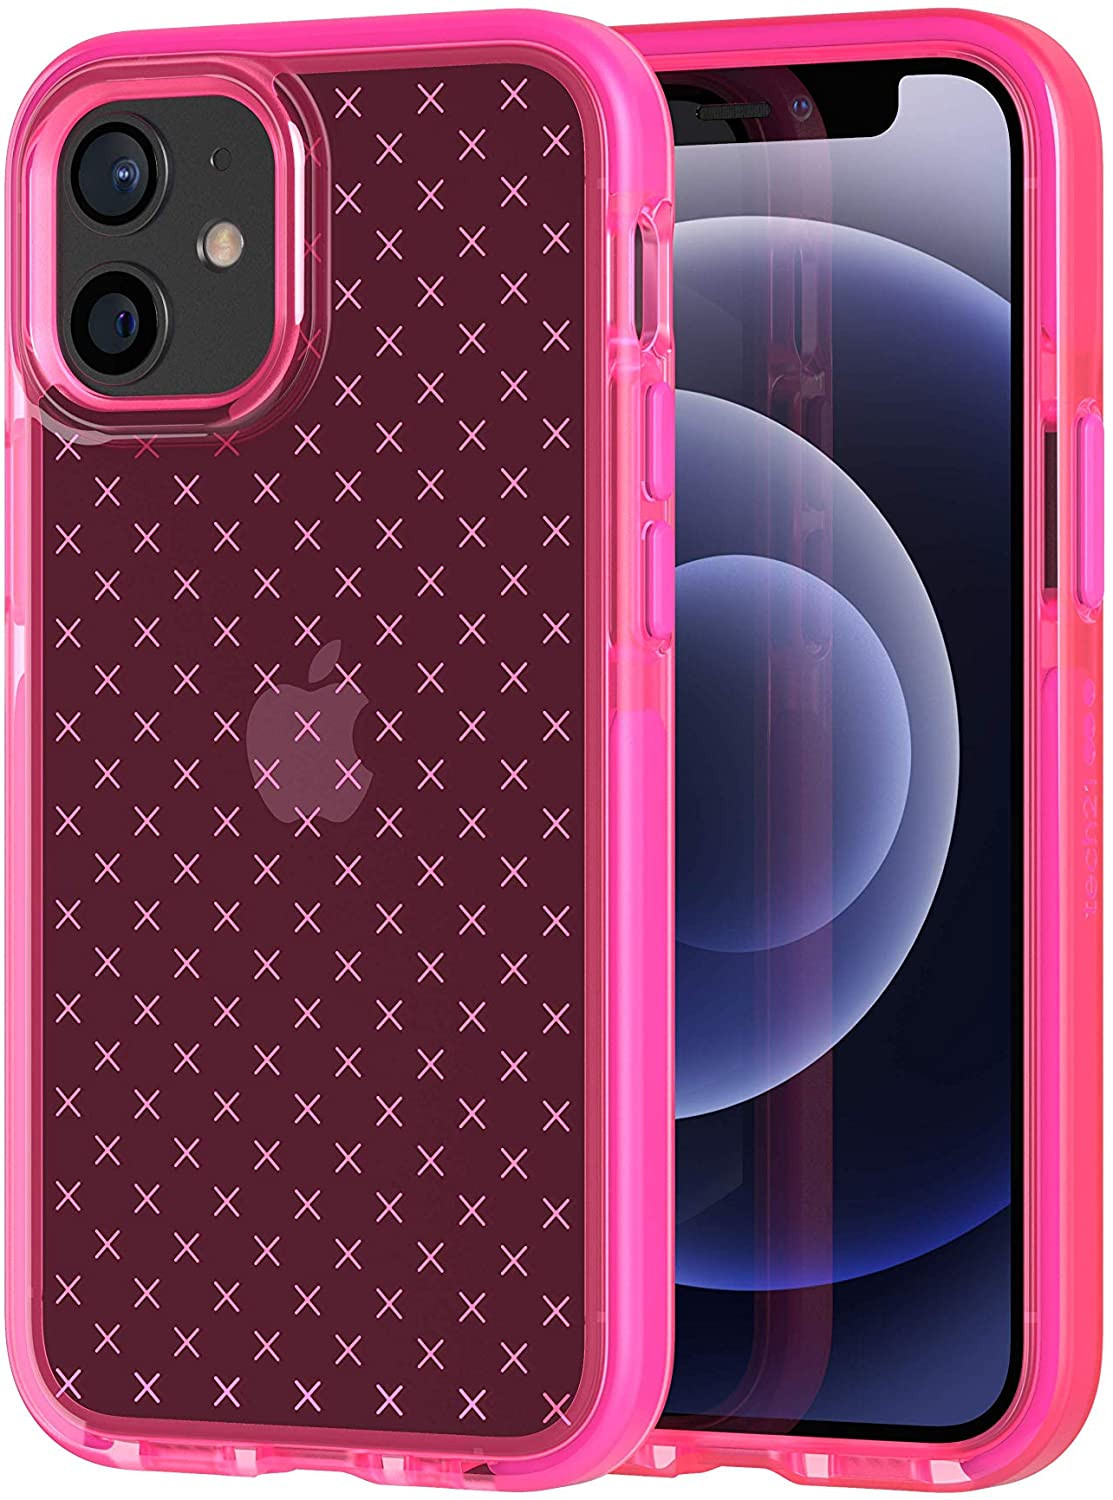 tech21 Evo Check for iPhone 12 Mini Pink